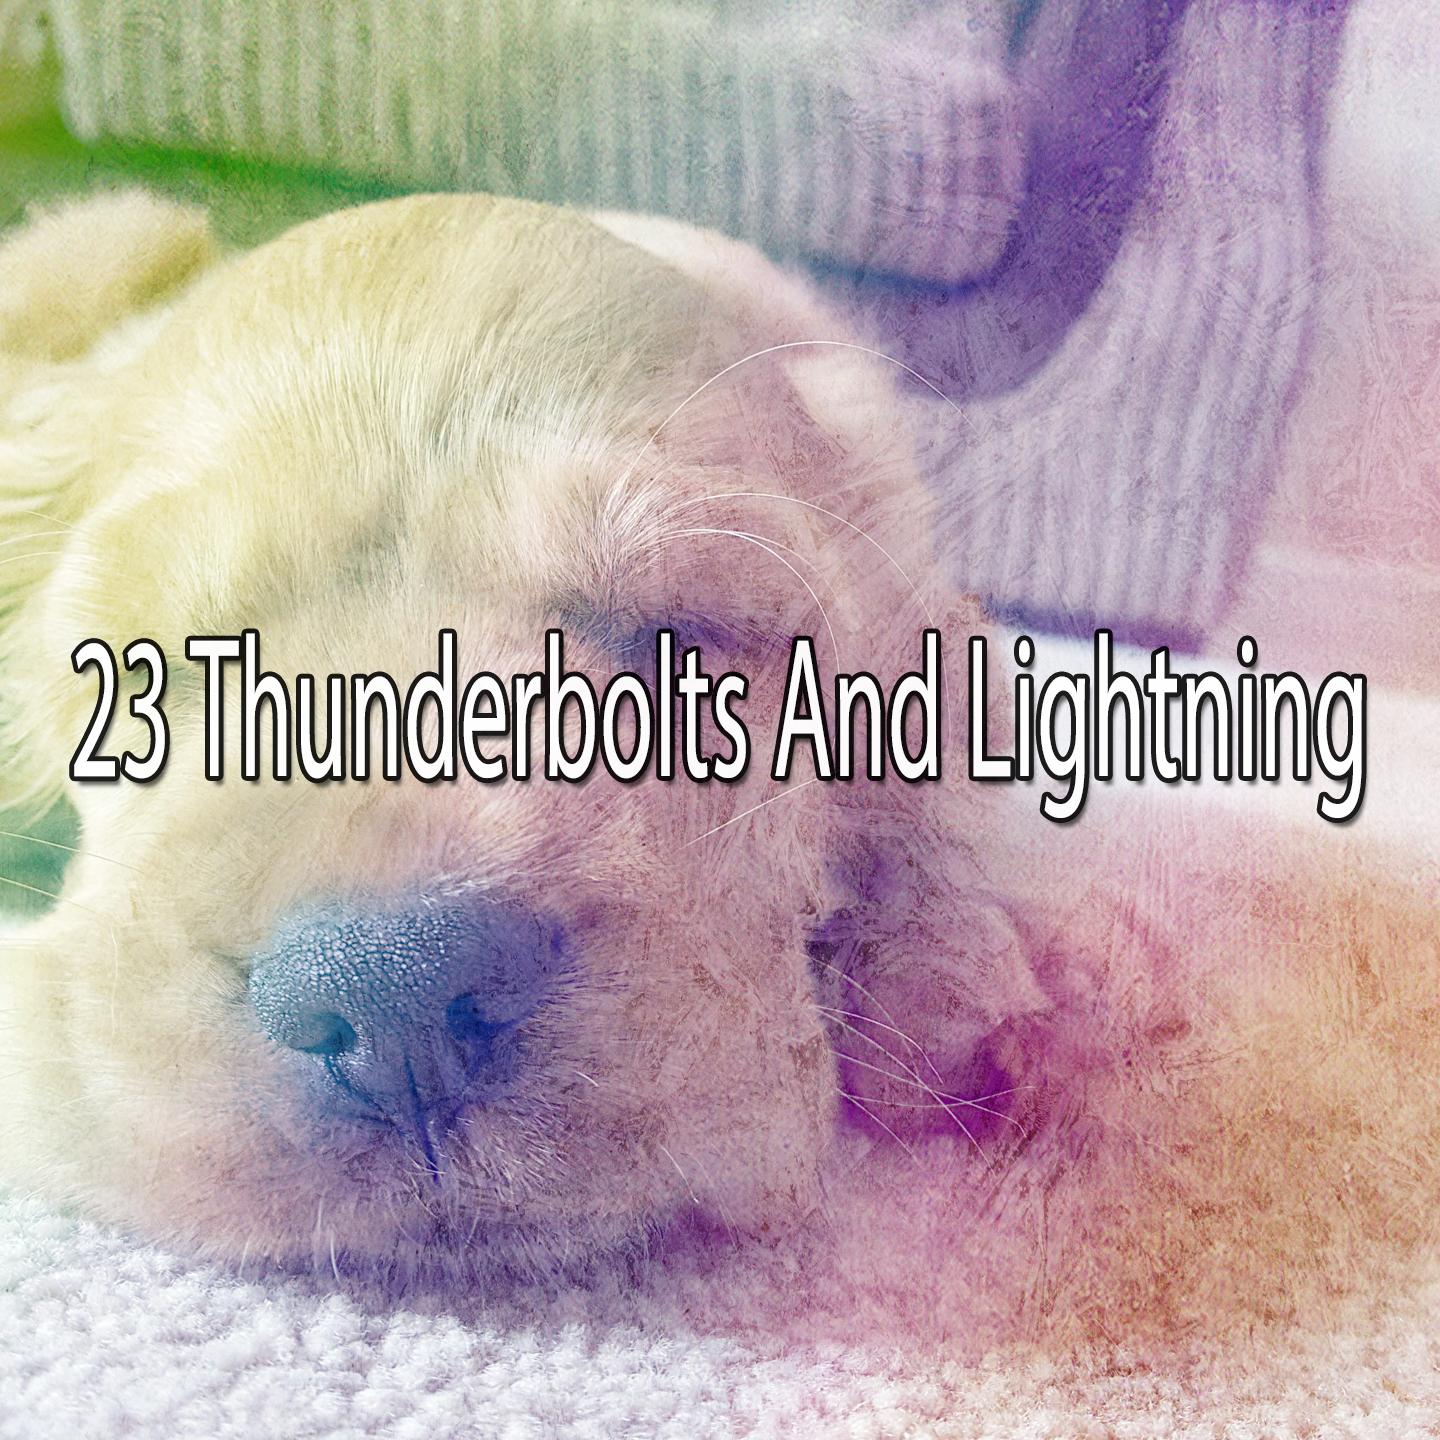 23 Thunderbolts and Lightning